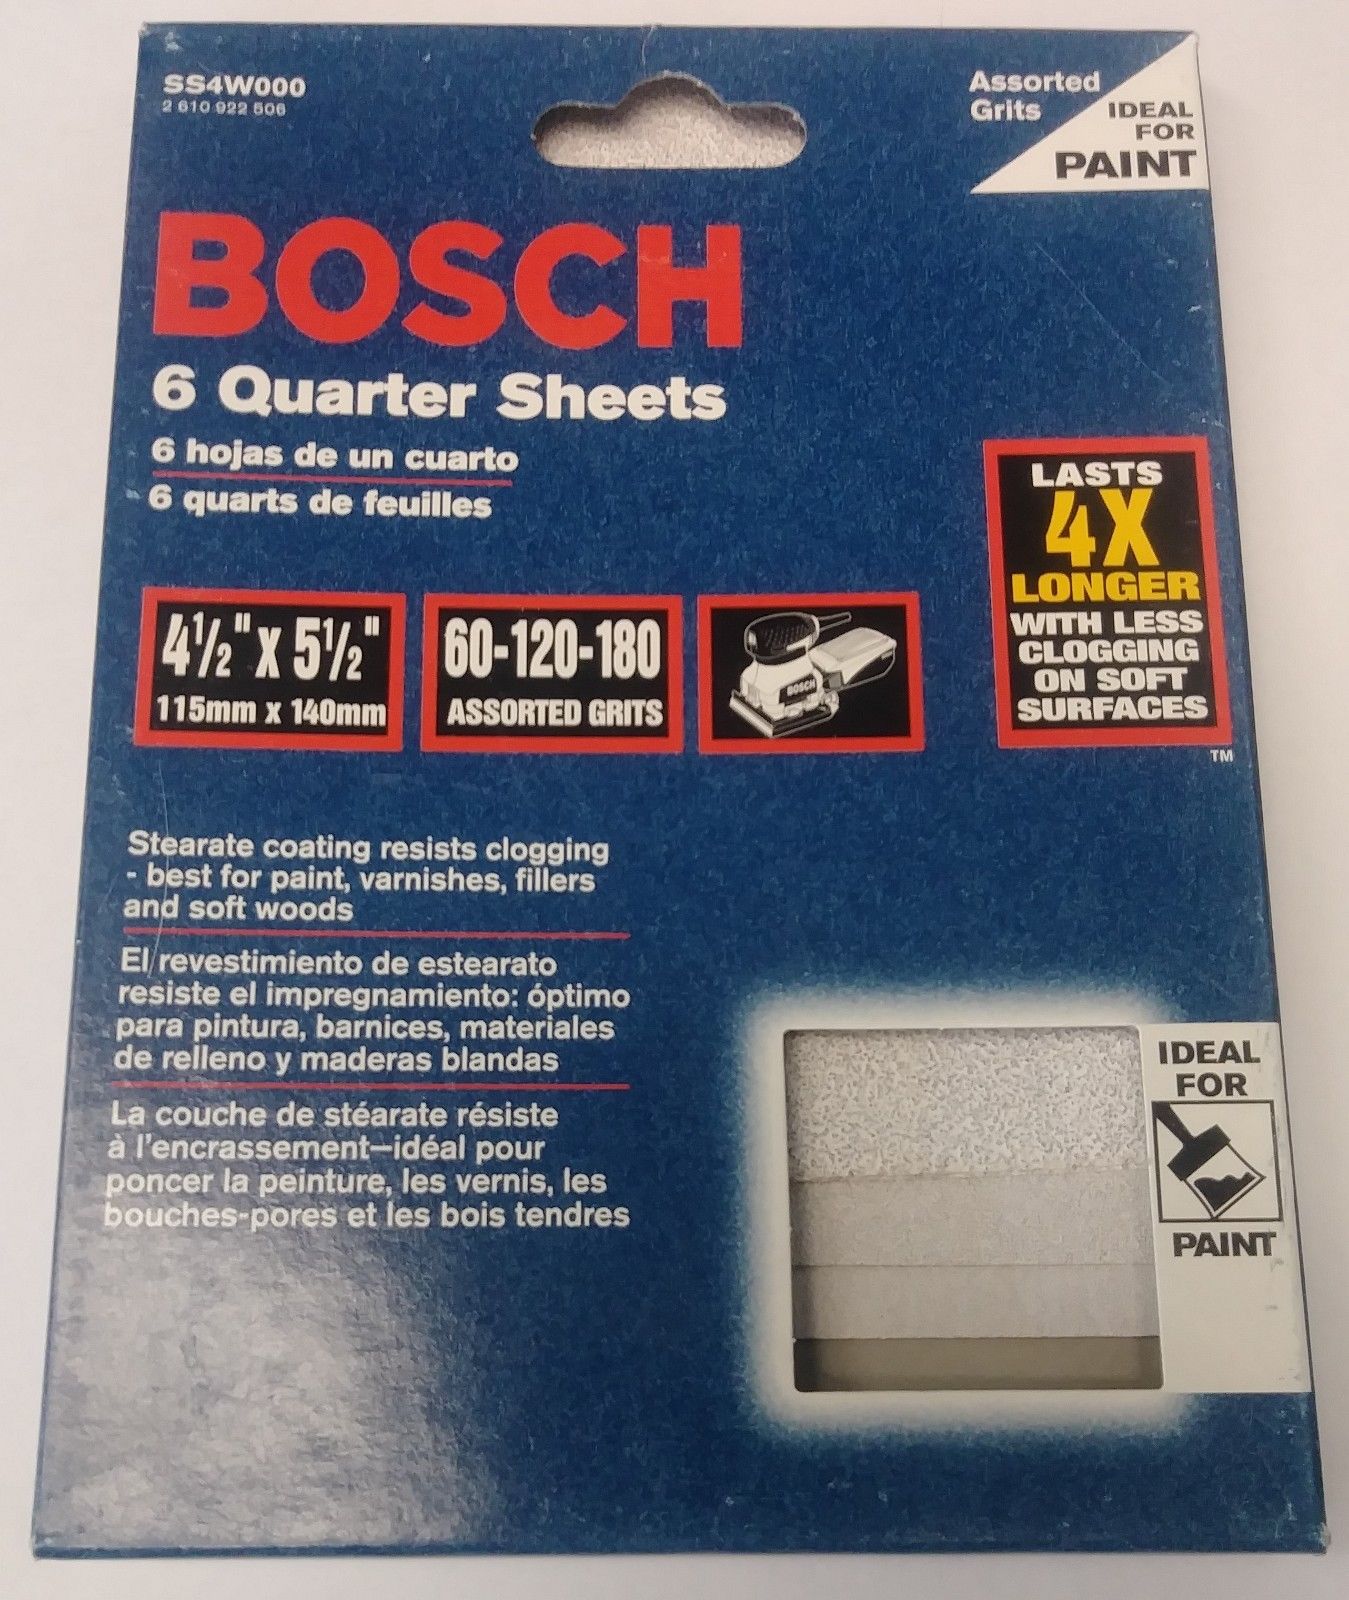 Bosch SS4W000 60-120-180 Assorted Grits 4-1/2" x 5-1/2" Sanding Sheets (6 Discs)